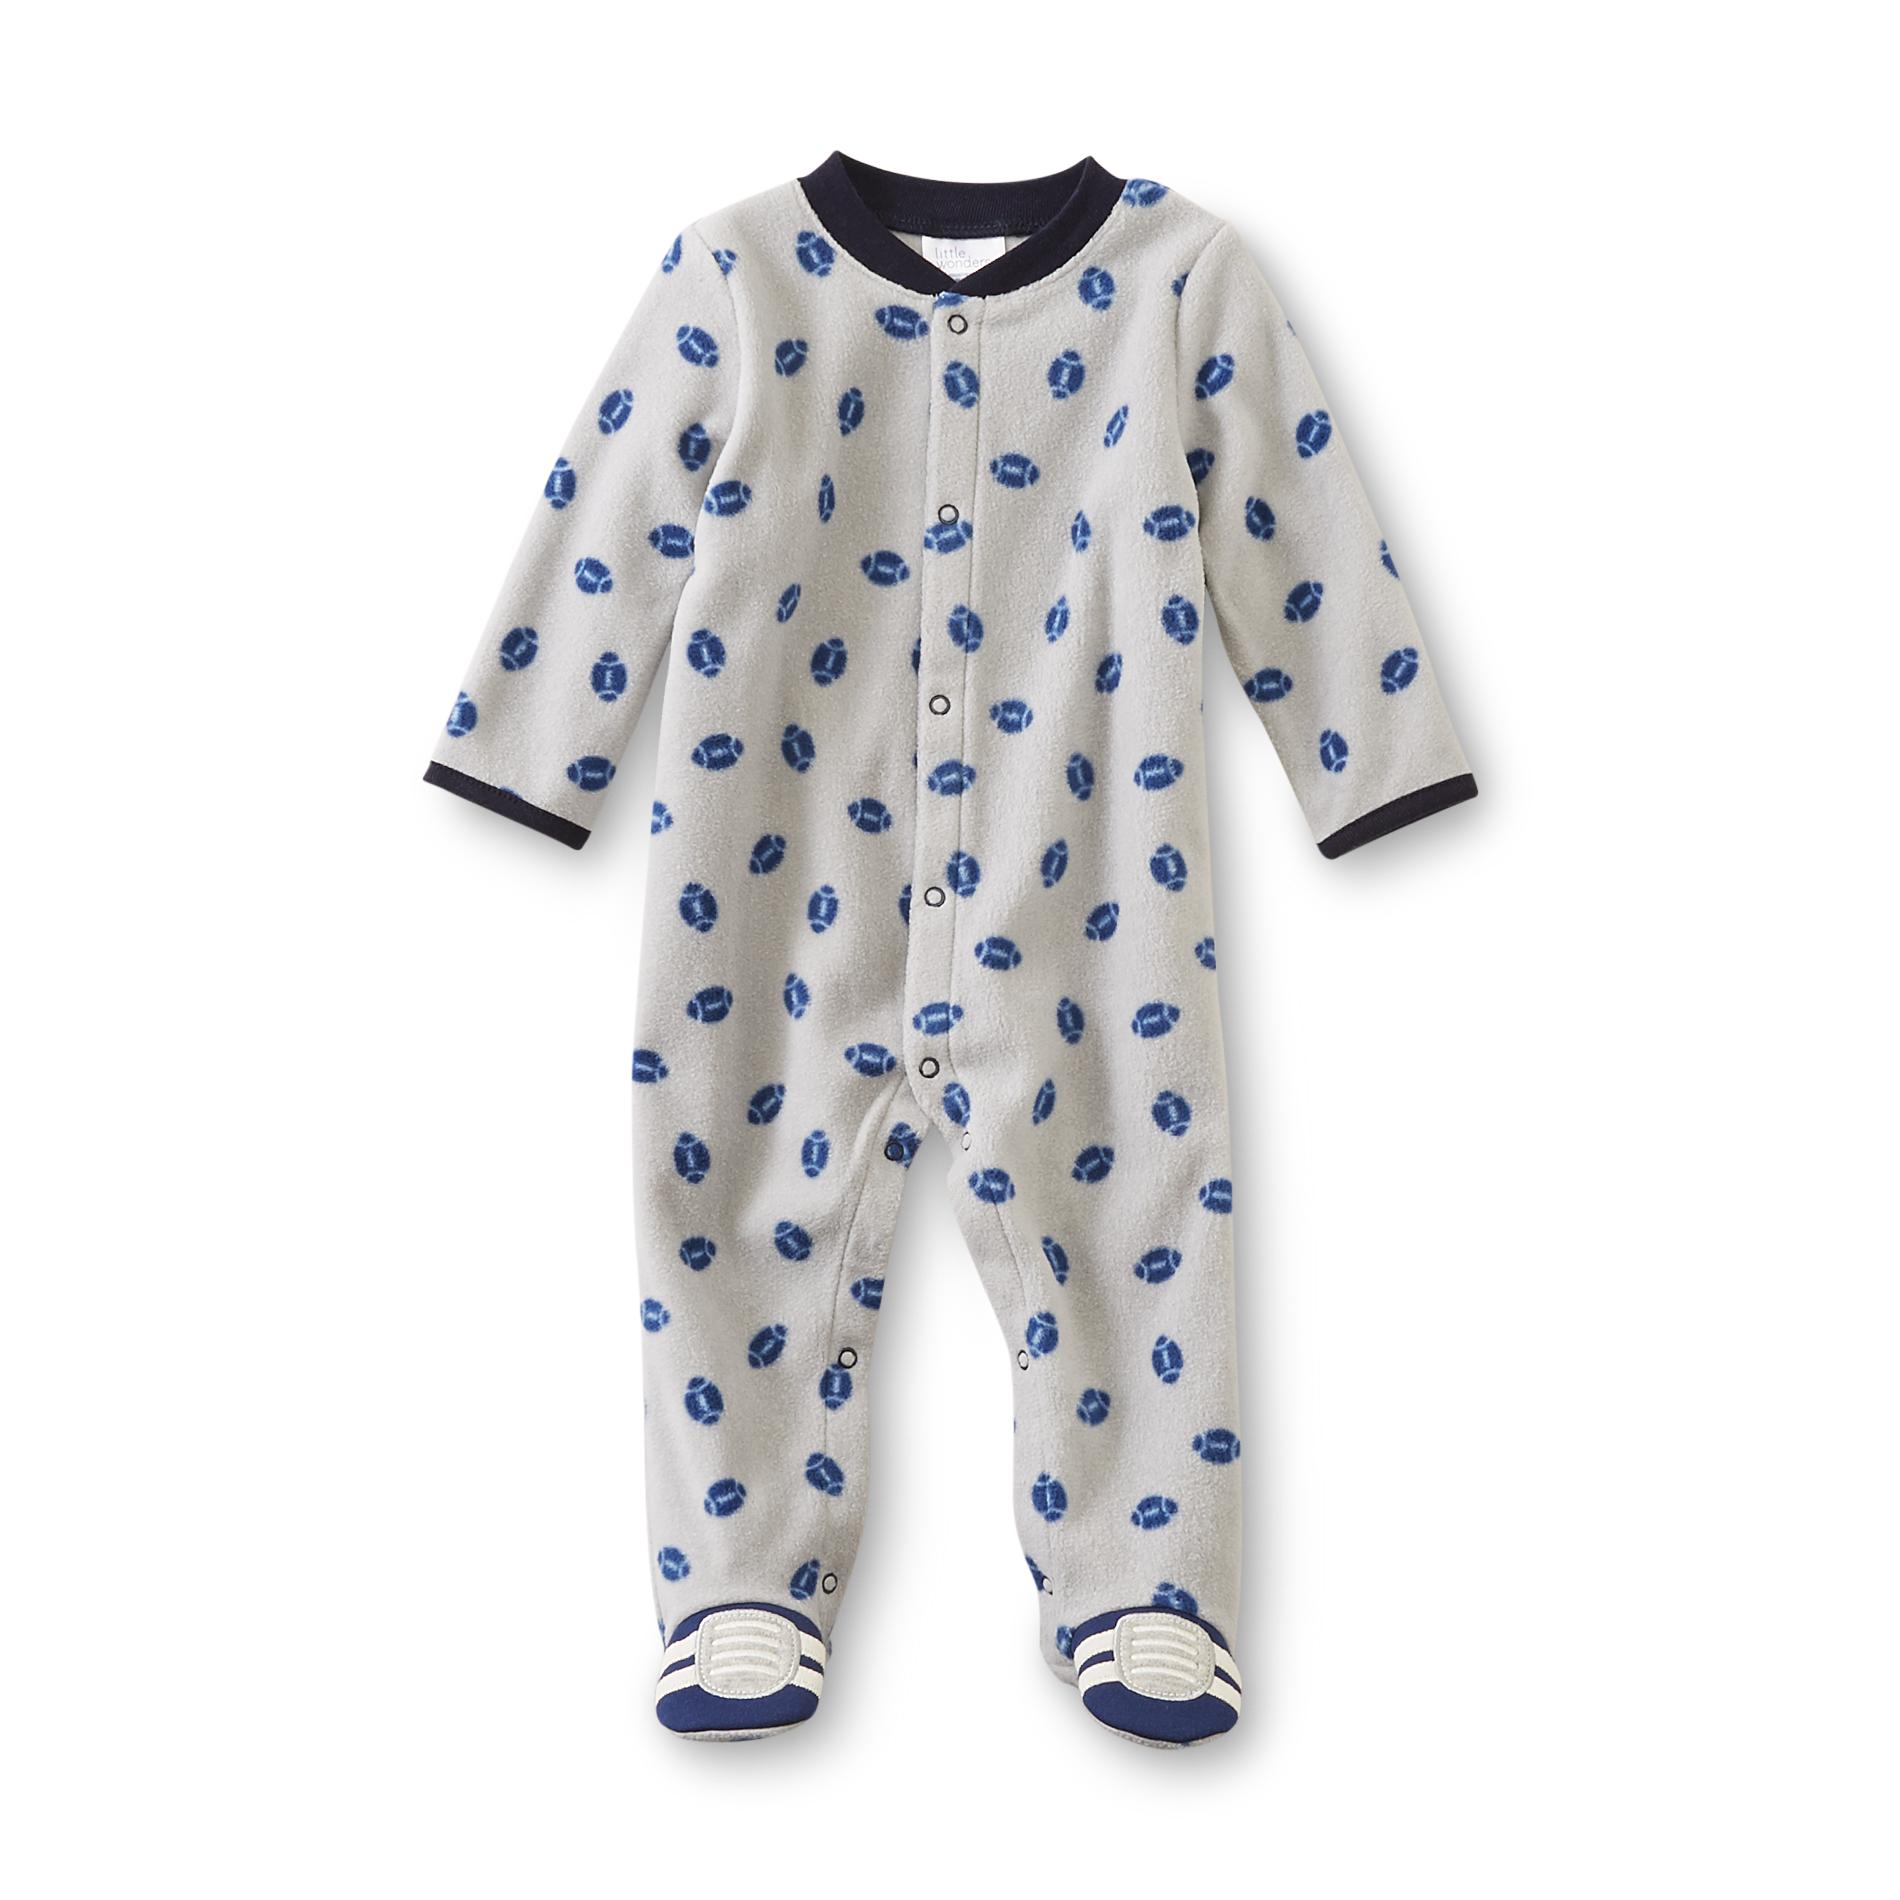 Little Wonders Newborn Boy's Fleece Sleeper Pajamas - Football Print